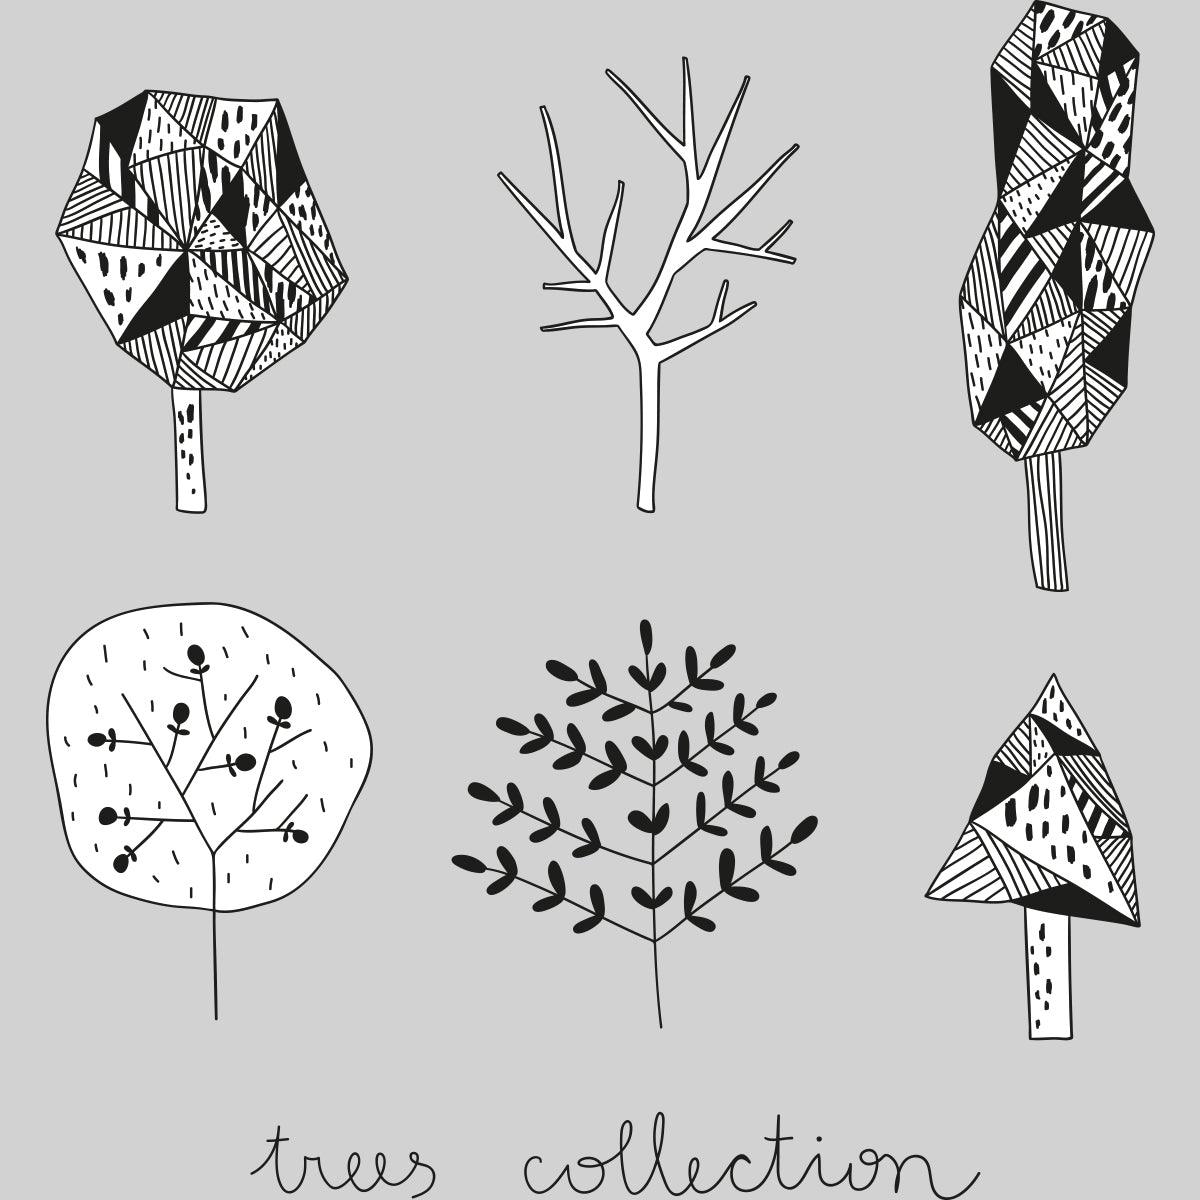 Hand Drawn Tree Collection T-shirt - Kuzi Tees